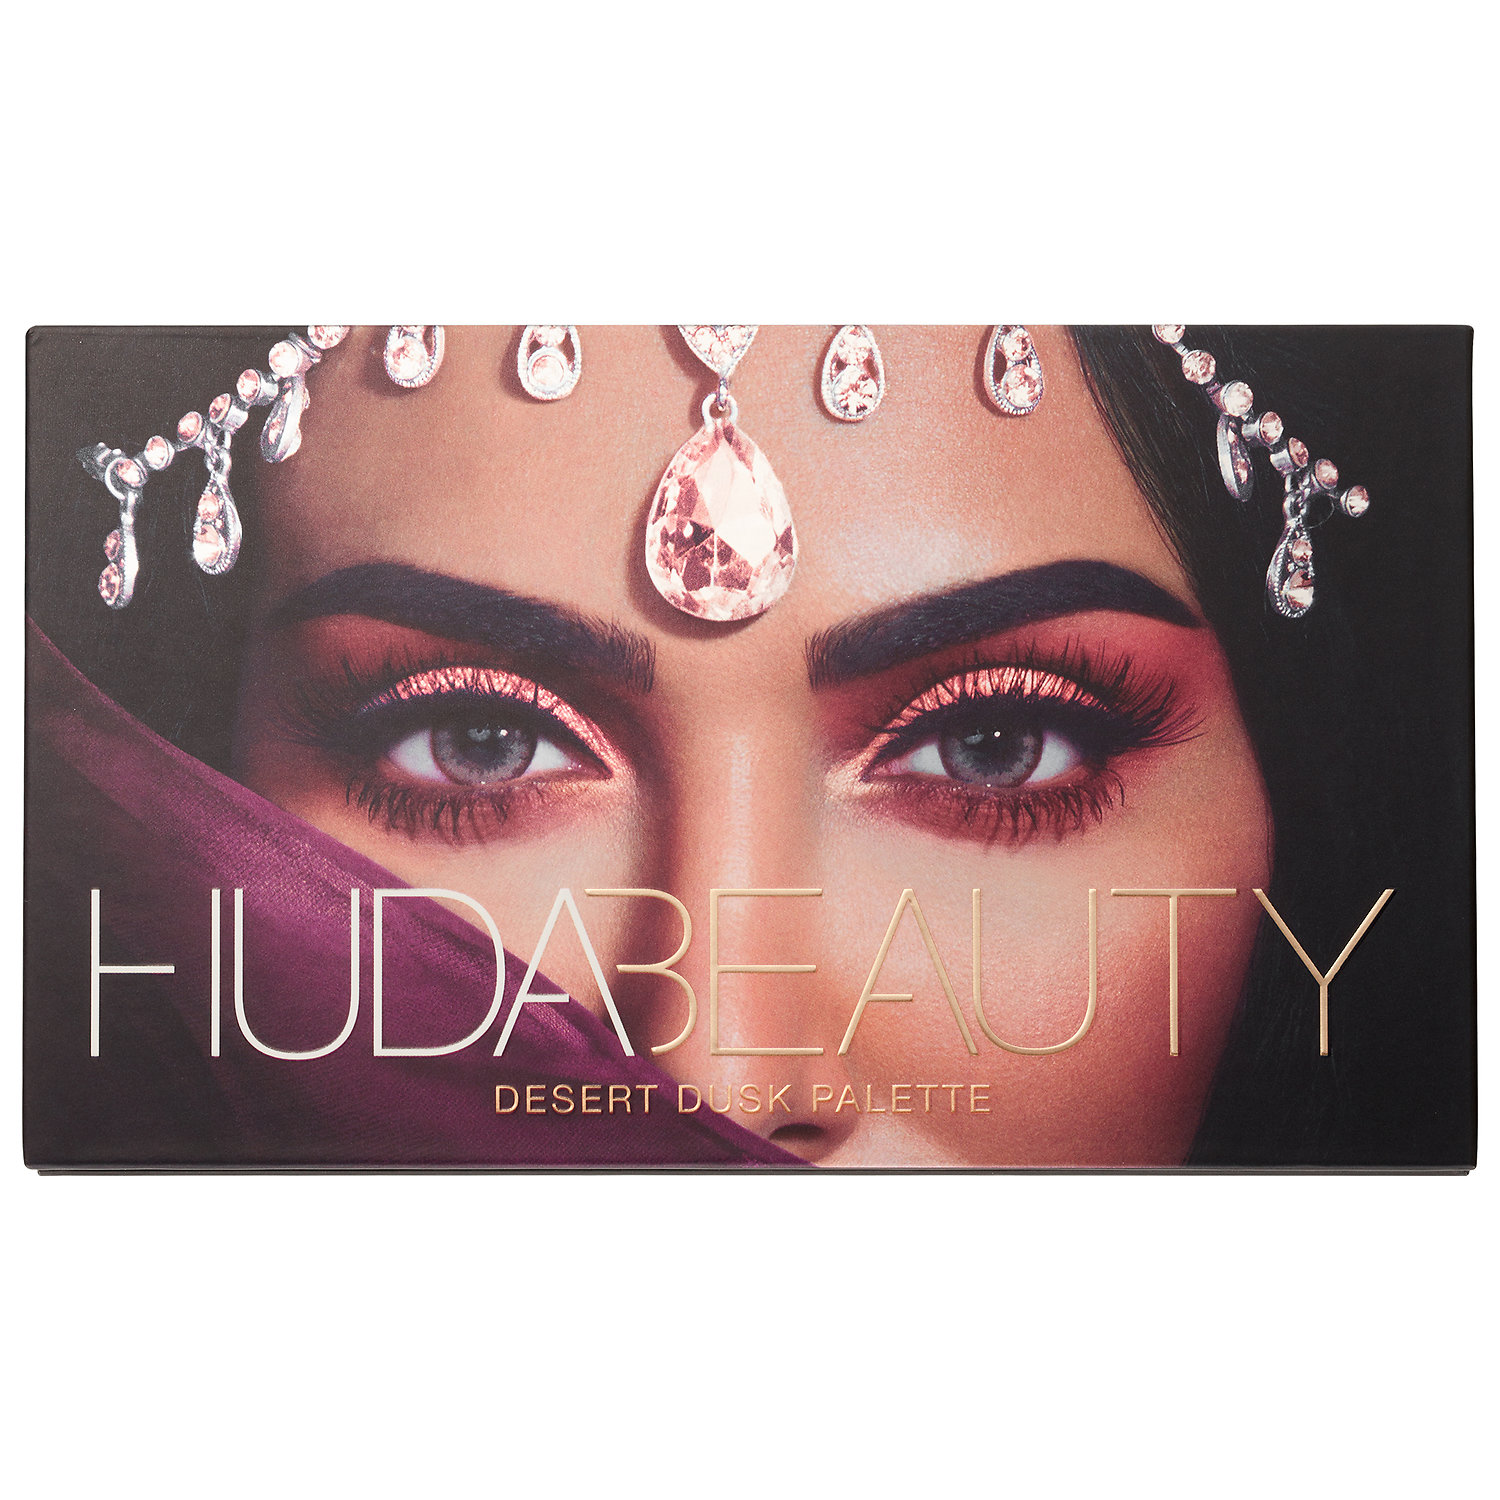 Huda Beauty komt te koop in Nederland!